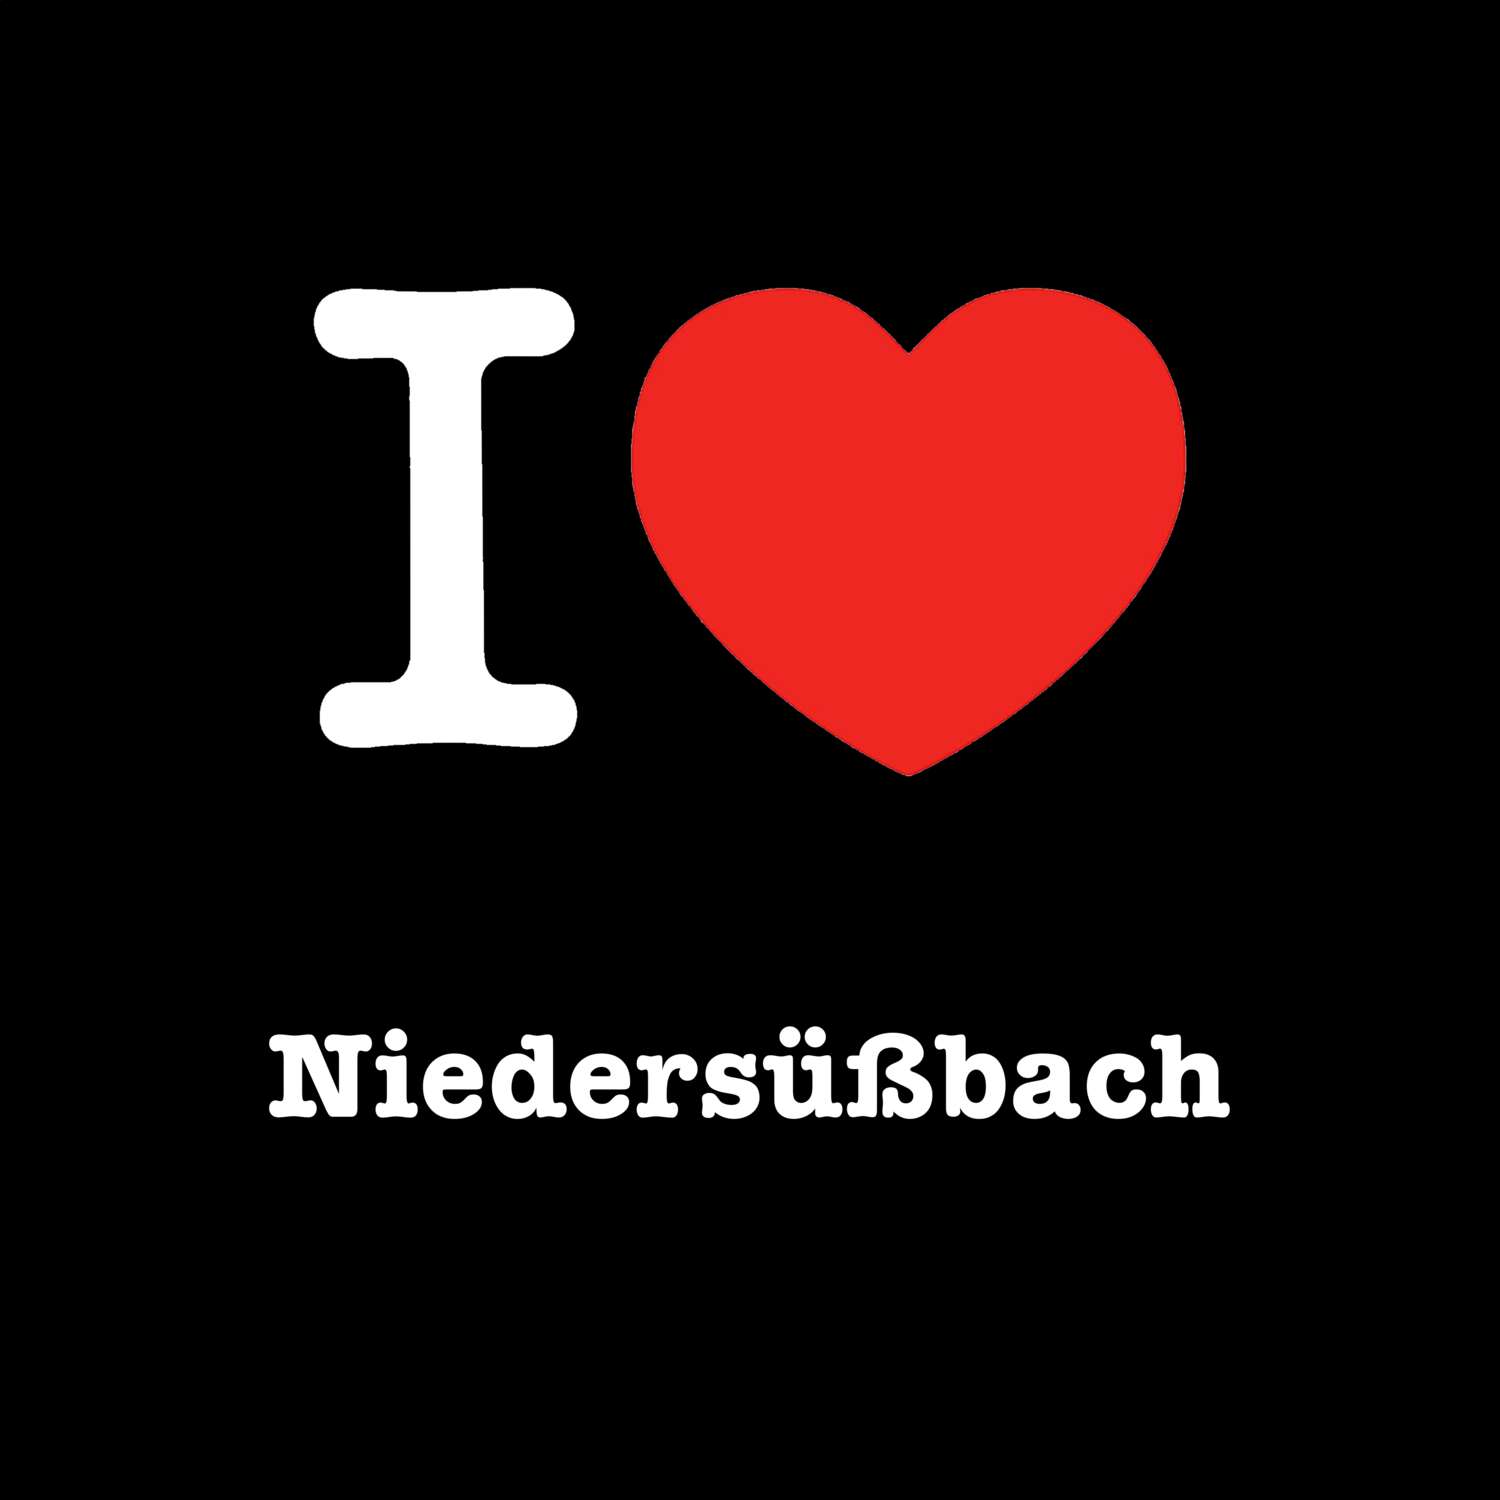 Niedersüßbach T-Shirt »I love«